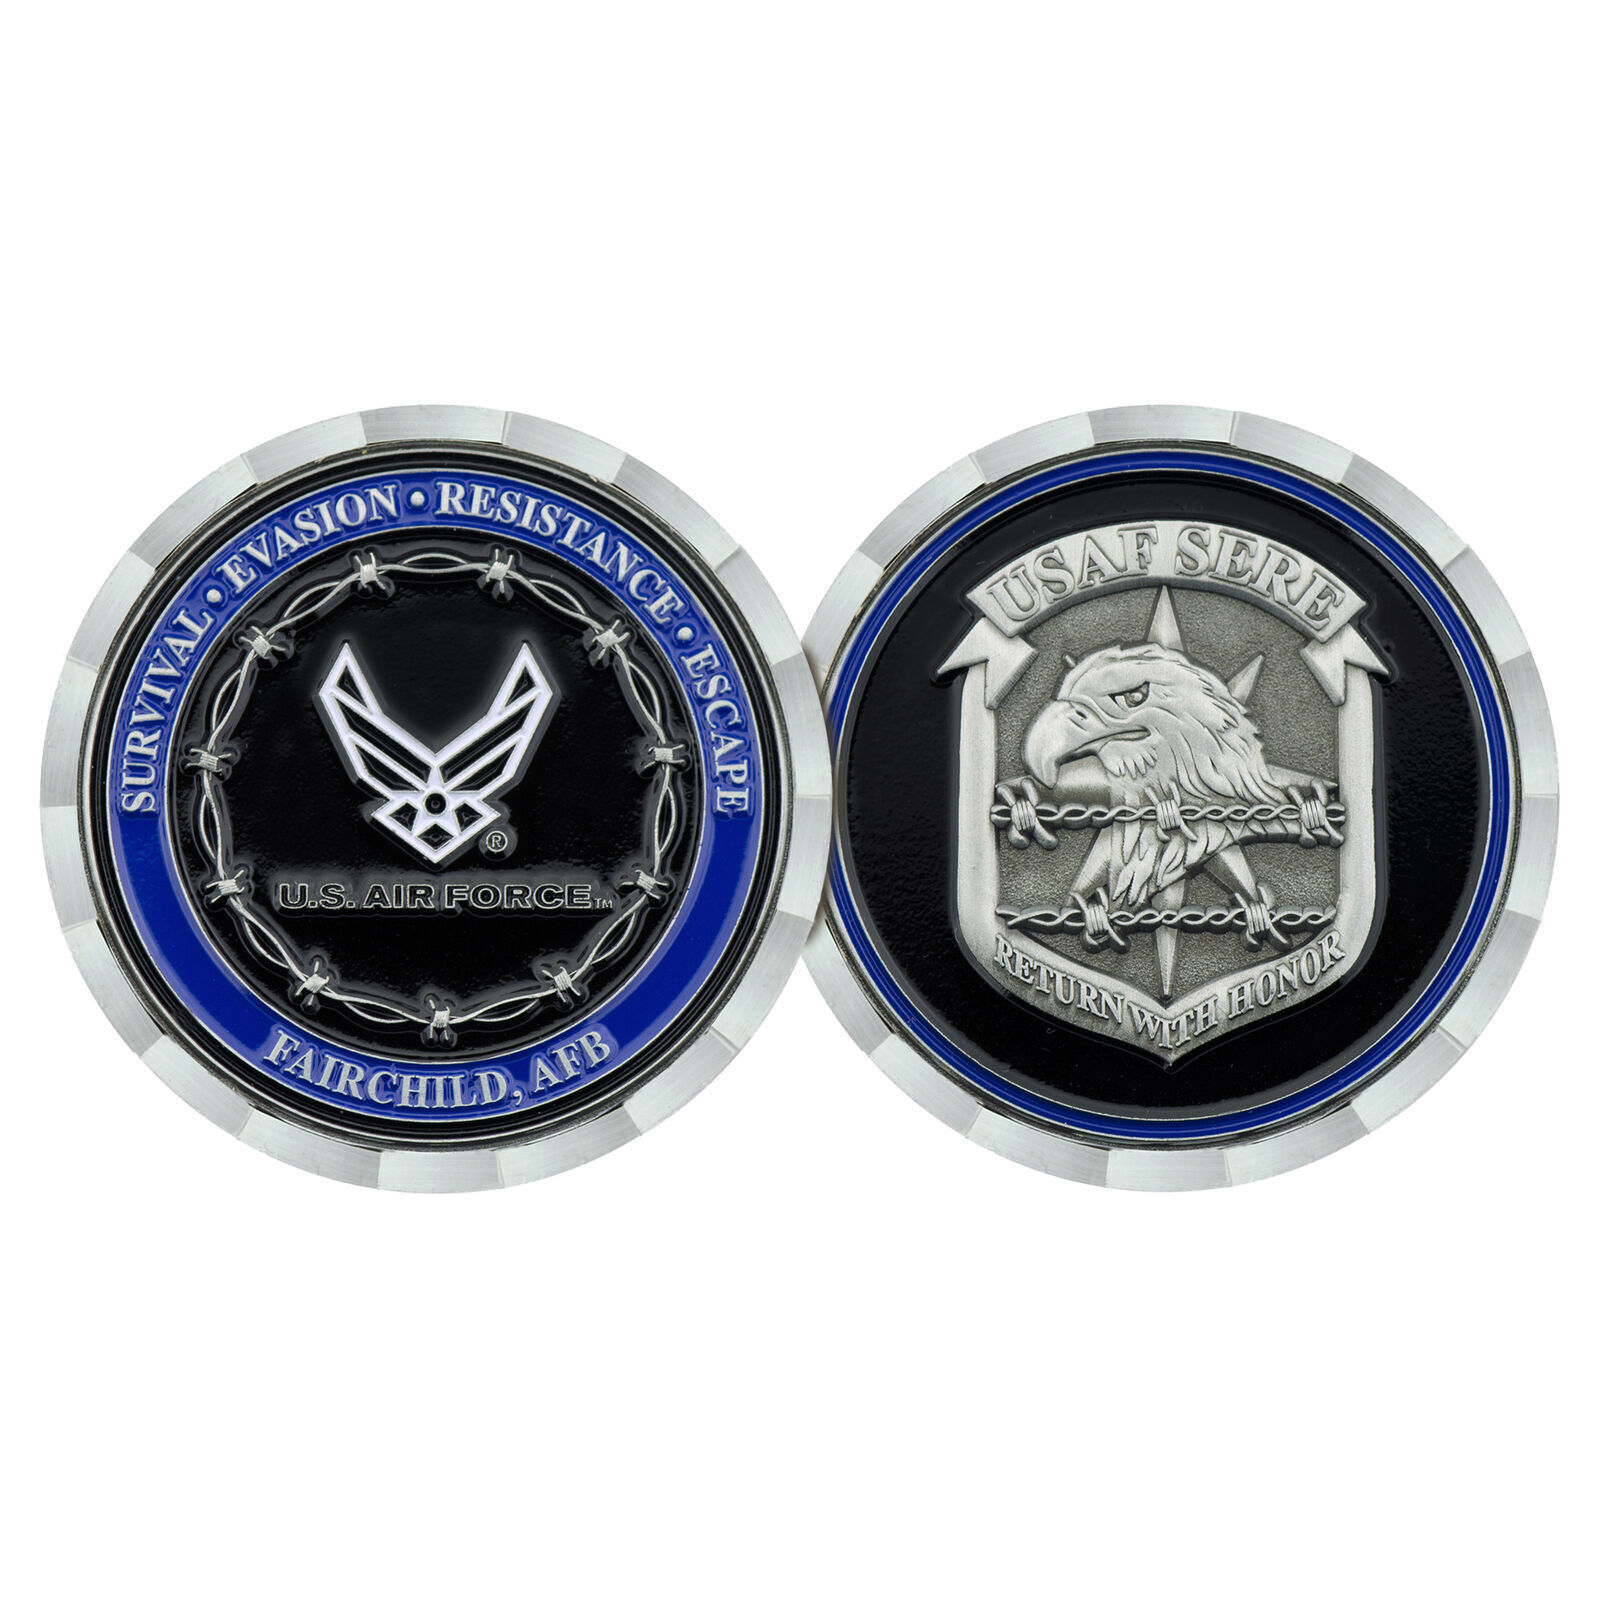 USAF SERE FAIRCHILD AFB COIN